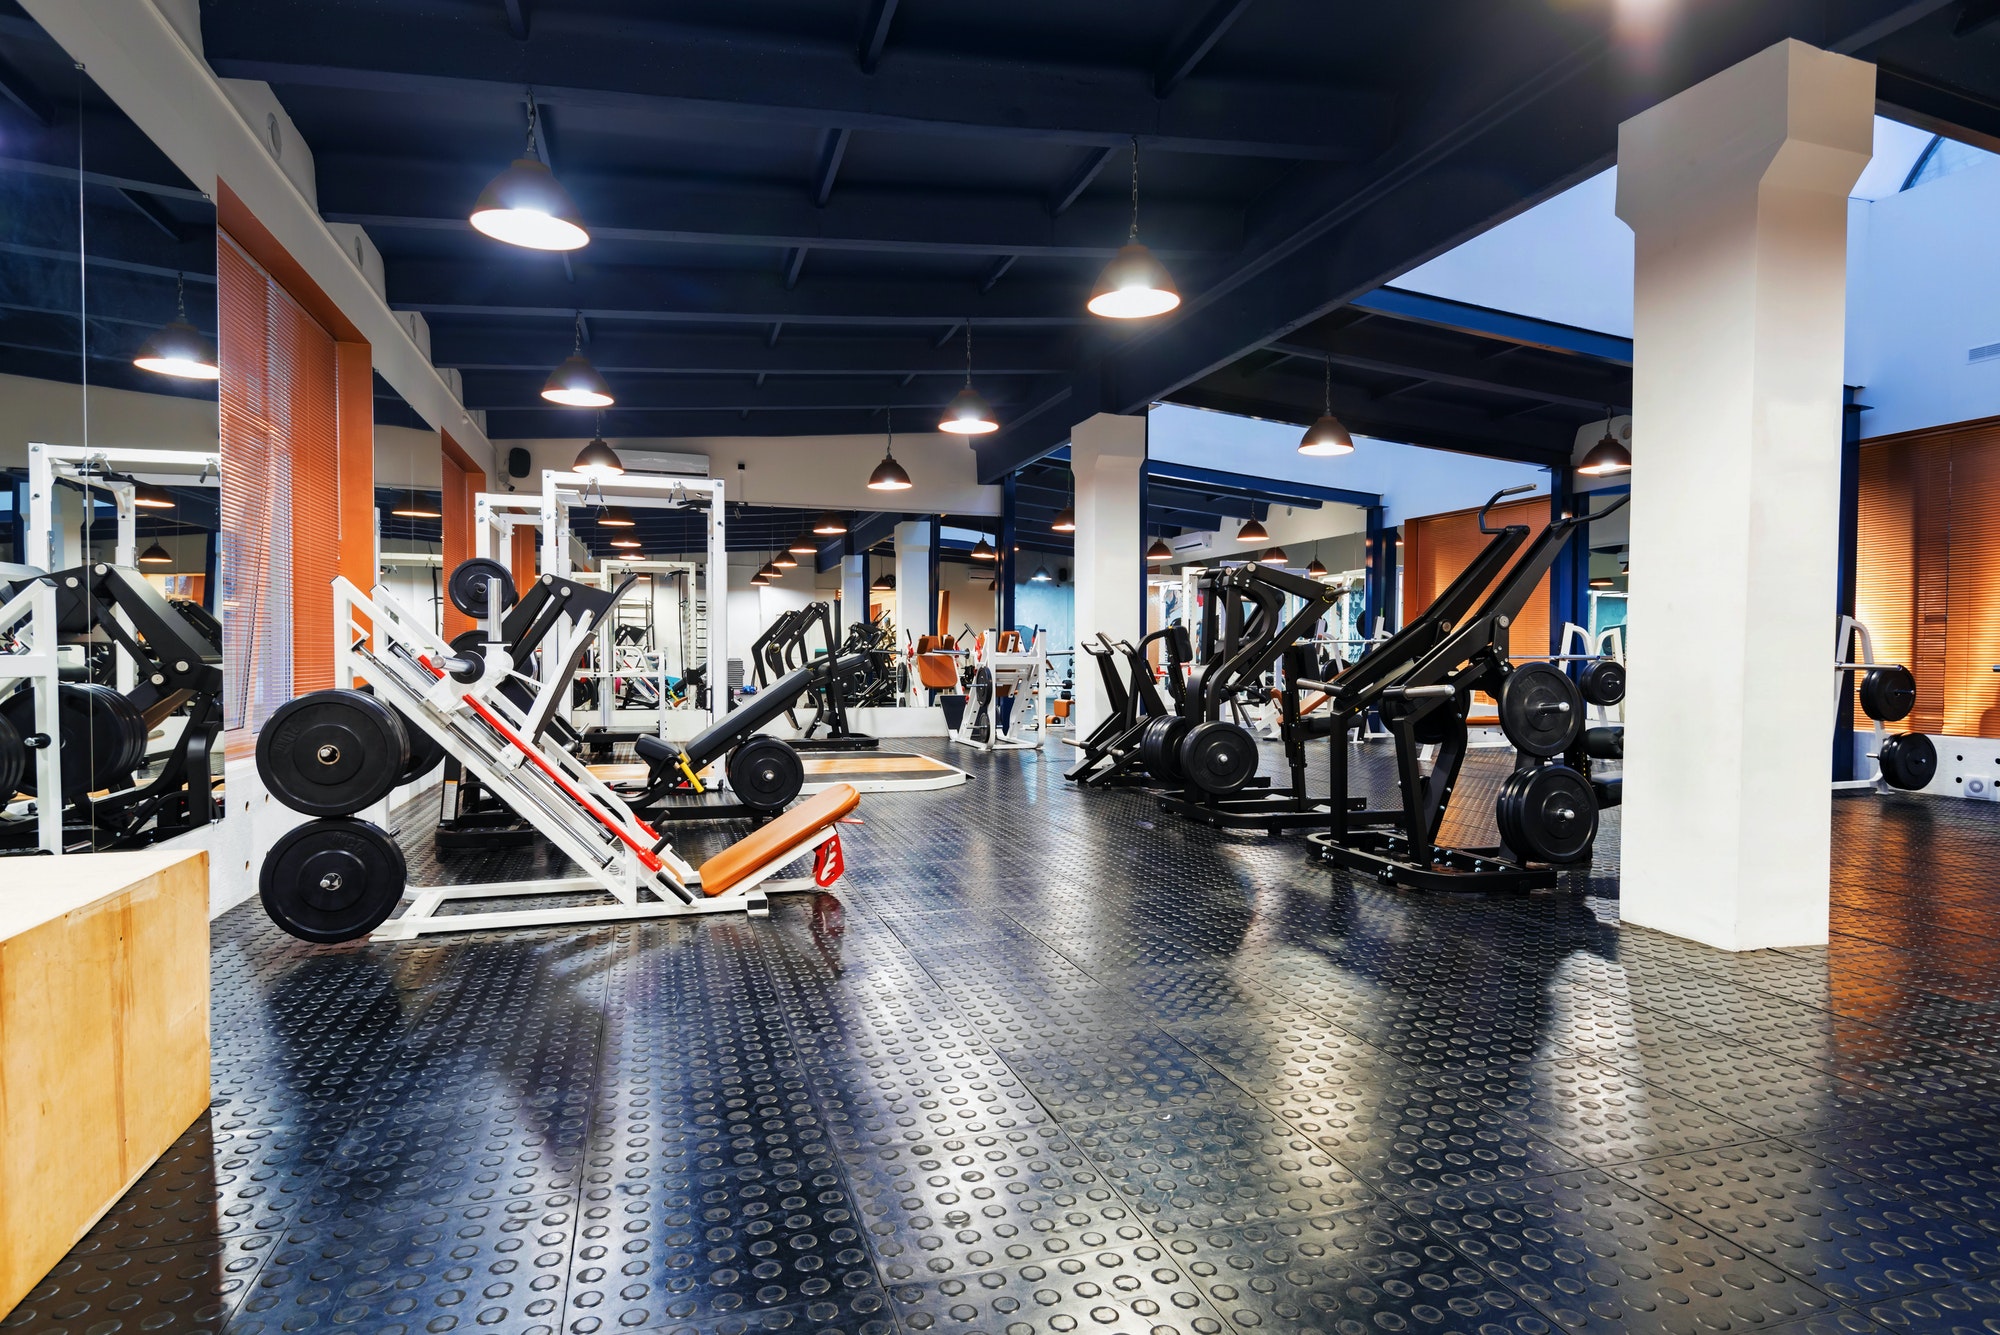 New fitness machines in modern gym interior